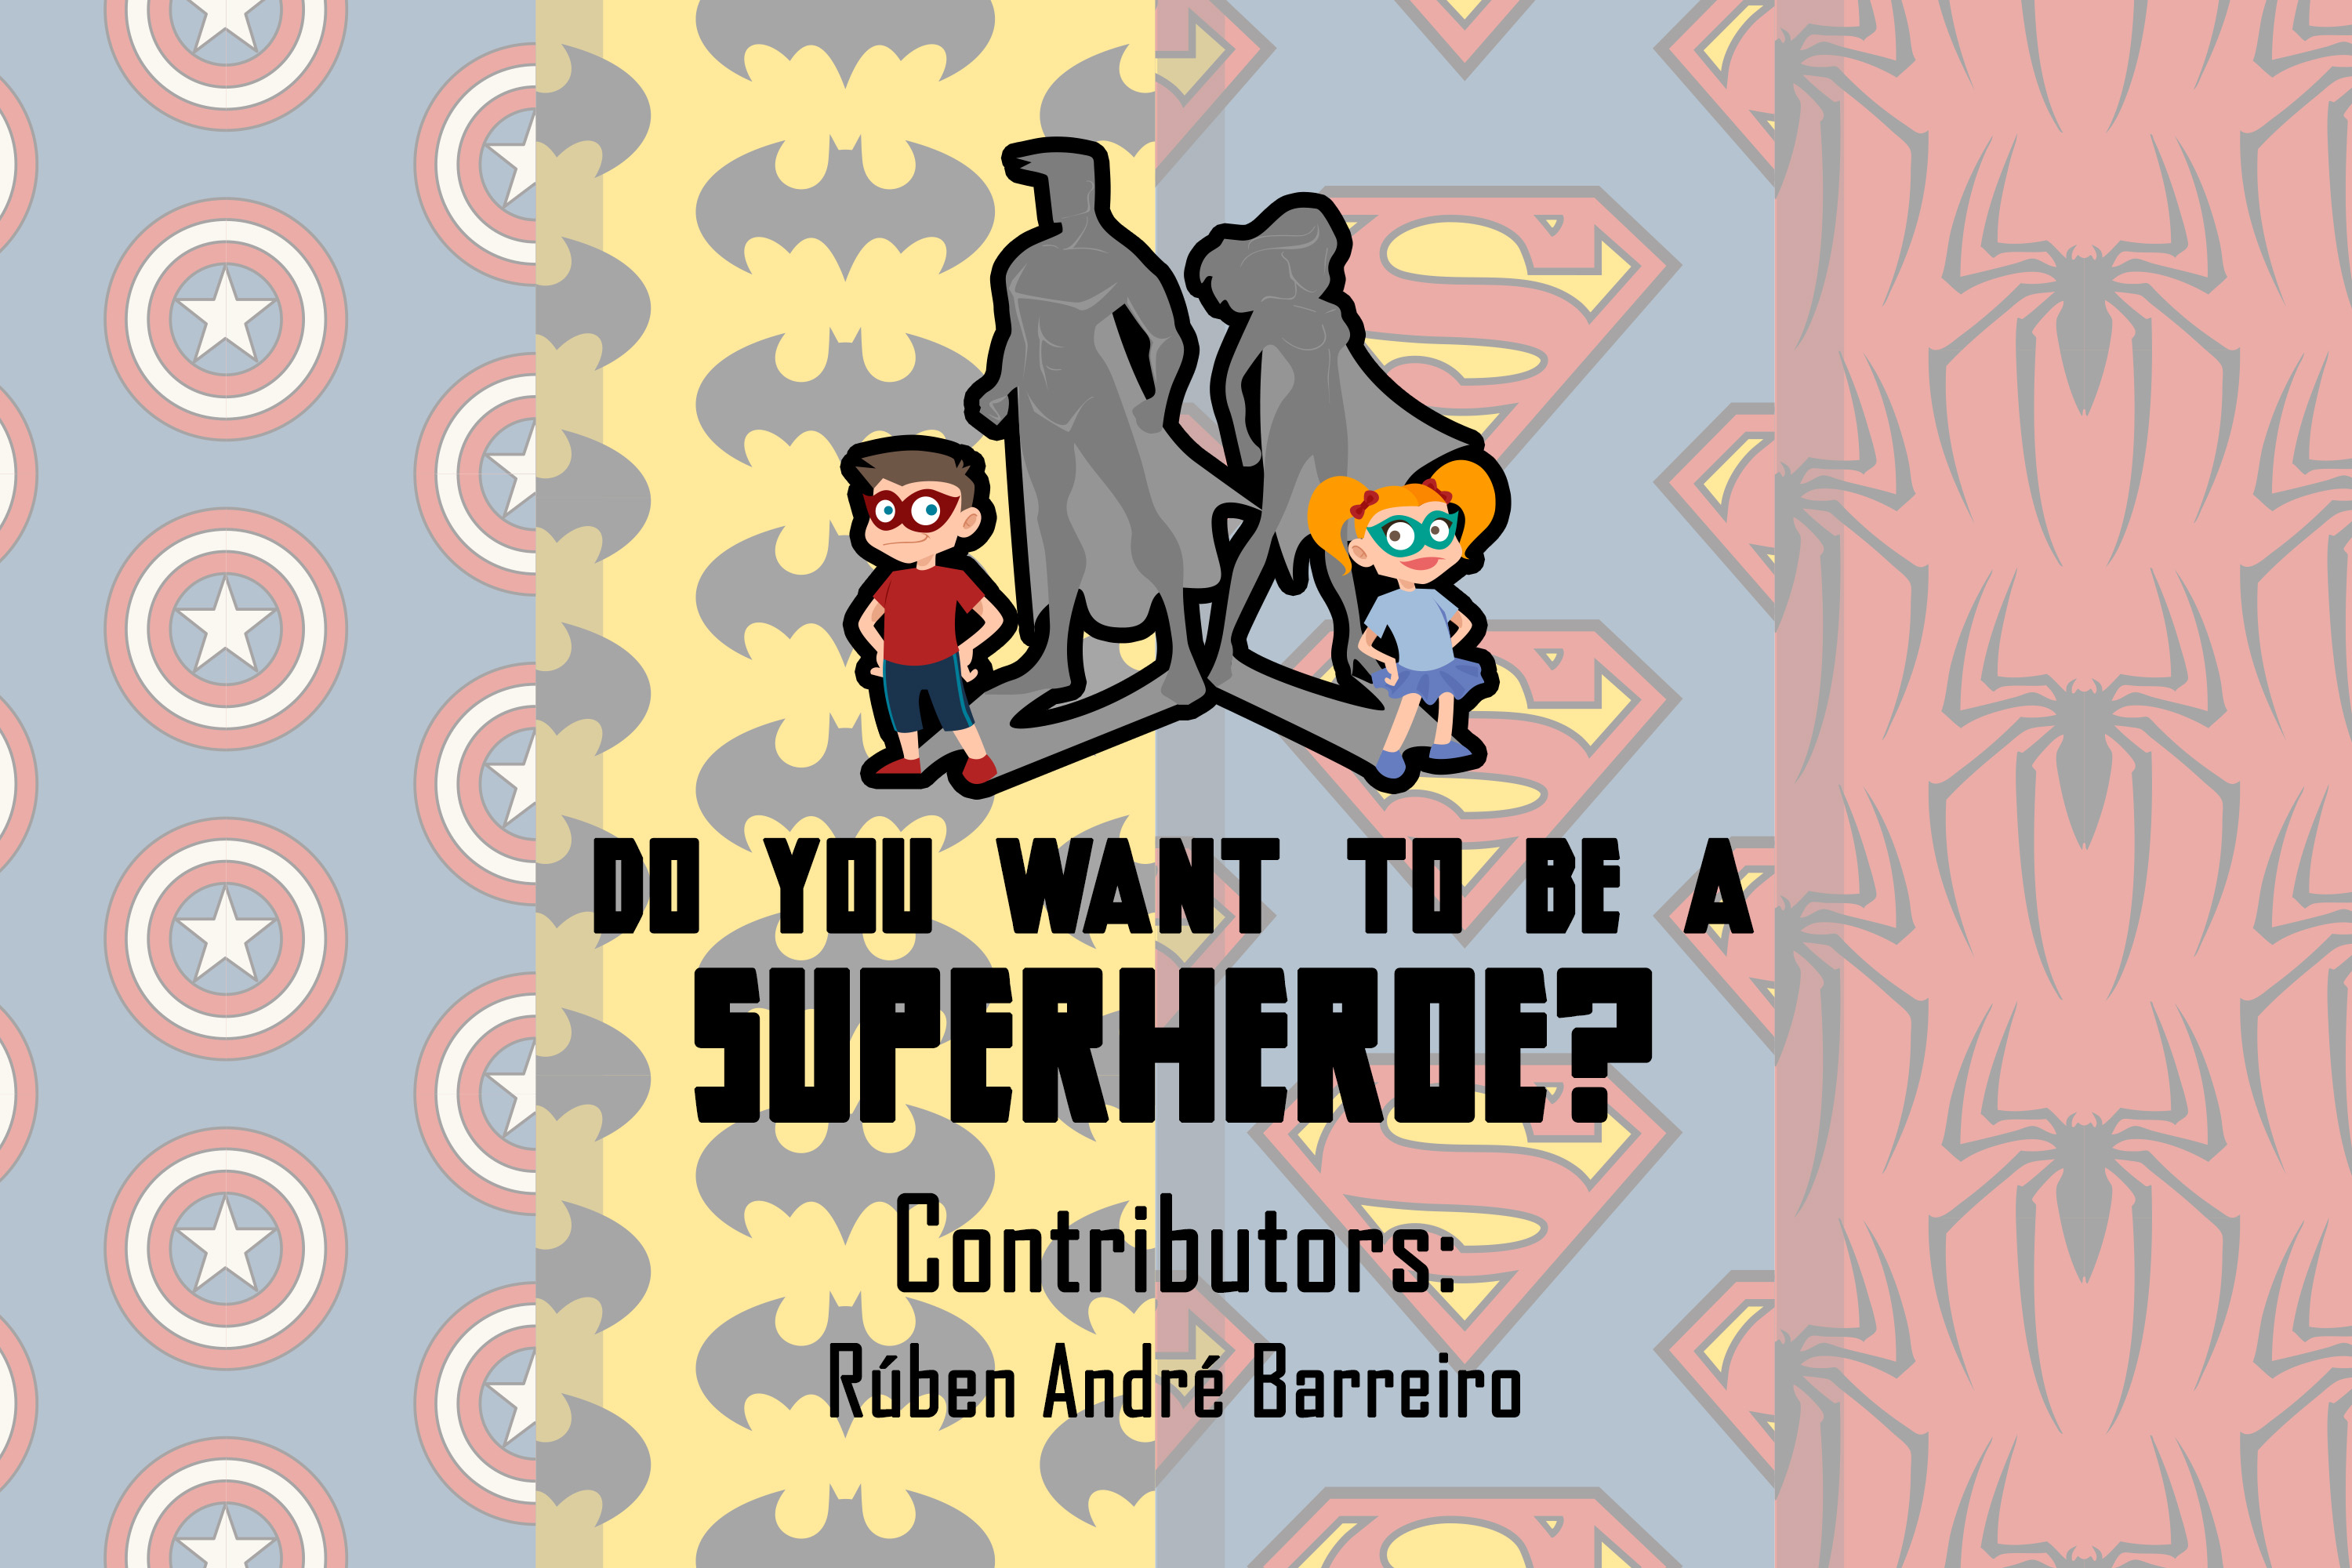 https://raw.githubusercontent.com/rubenandrebarreiro/do-you-want-to-be-a-superheroe/master/imgs/JPGs/banner-1.jpg